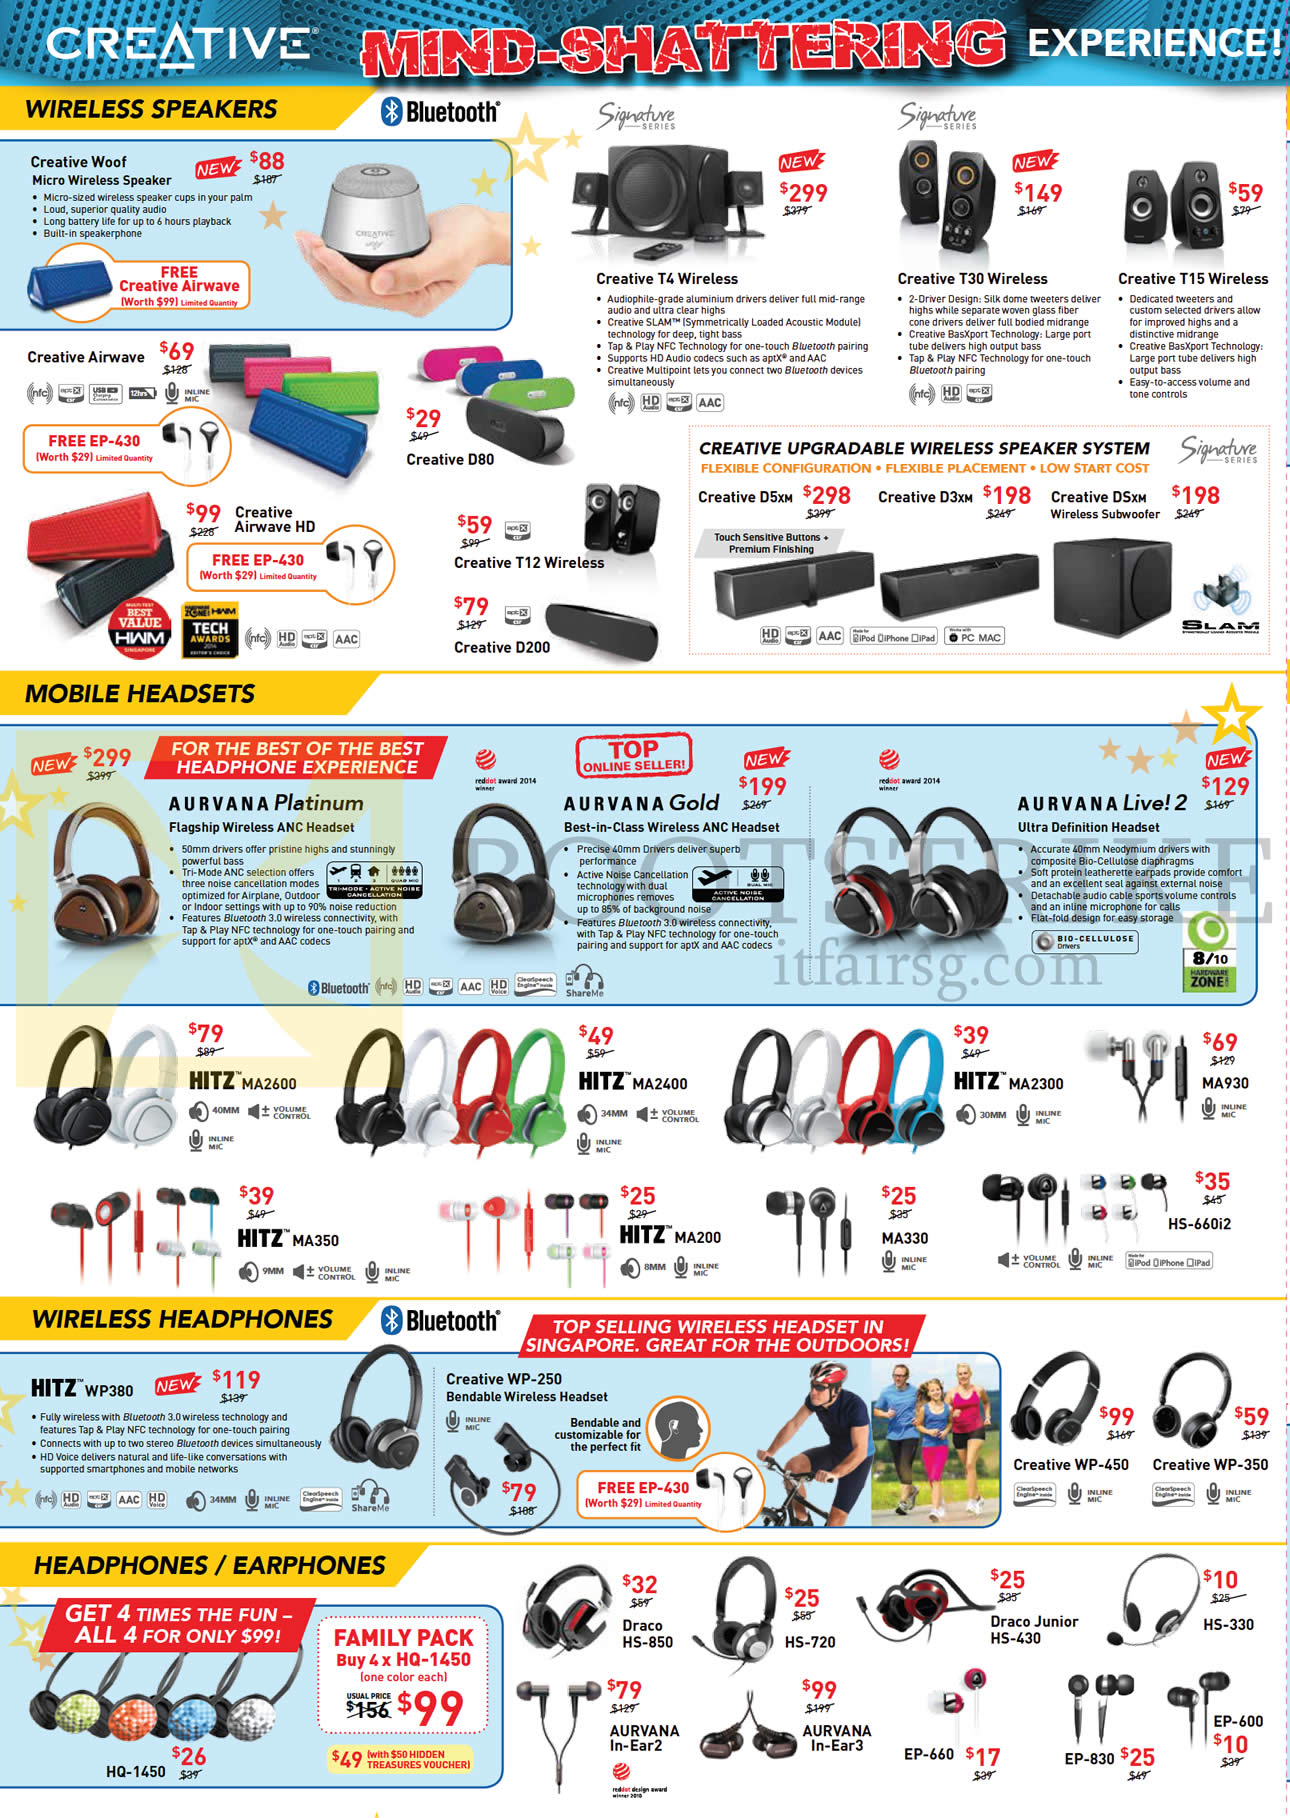 PC SHOW 2014 price list image brochure of Creative Wireless Speakers, Mobile Headsets, Headphones, Earphones Creative T4, T30, T15, Aurvana Platinum, Gold, Live 2, Hitz MA2600, 2400, 2300, 930, 350, 200, 330, HS-660i2